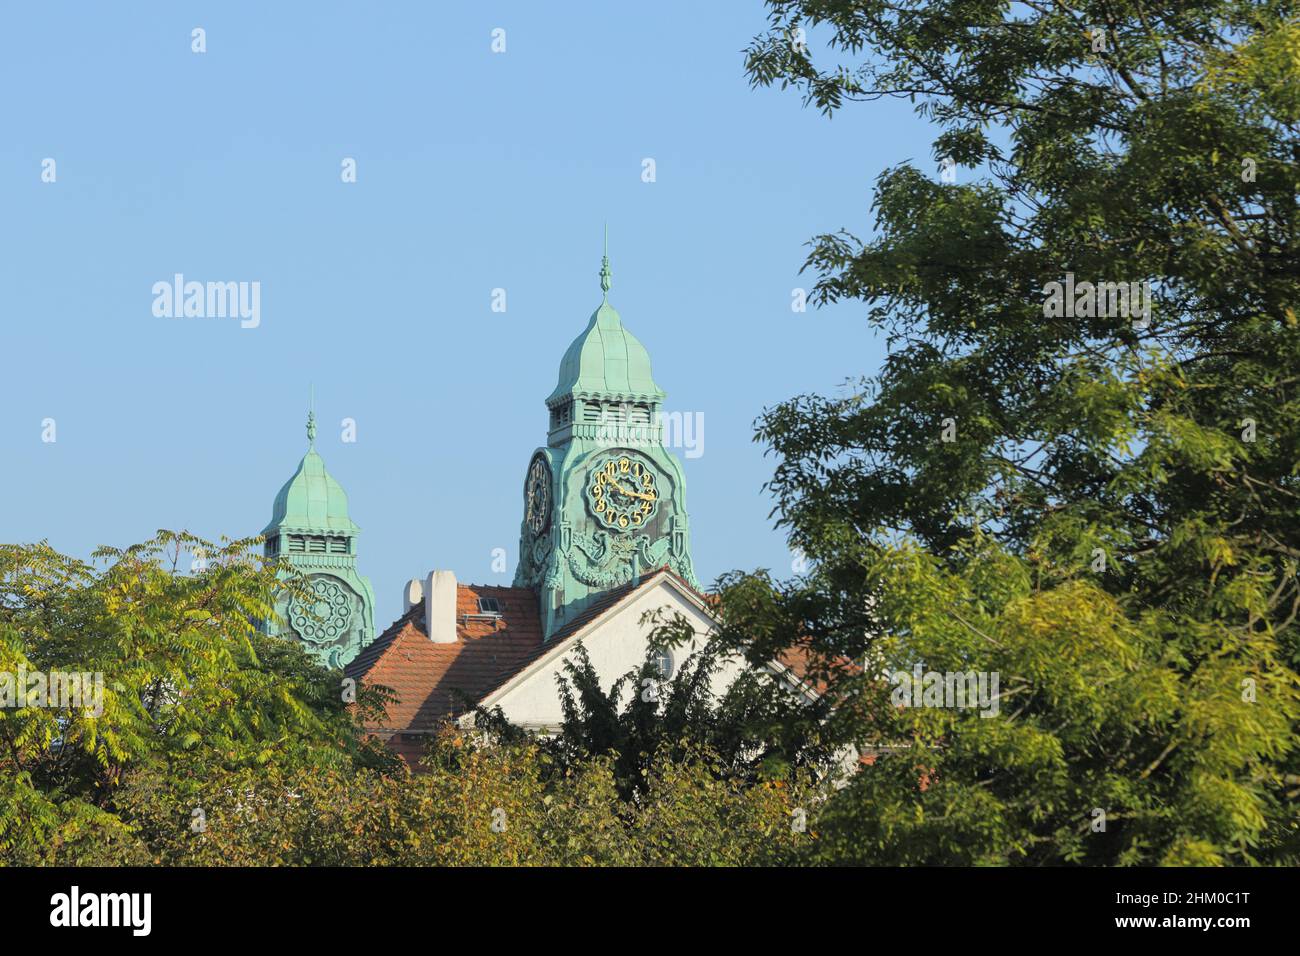 View of the spiers of the Sprudelhof in Bad Nauheim, Hesse, Germany Stock Photo